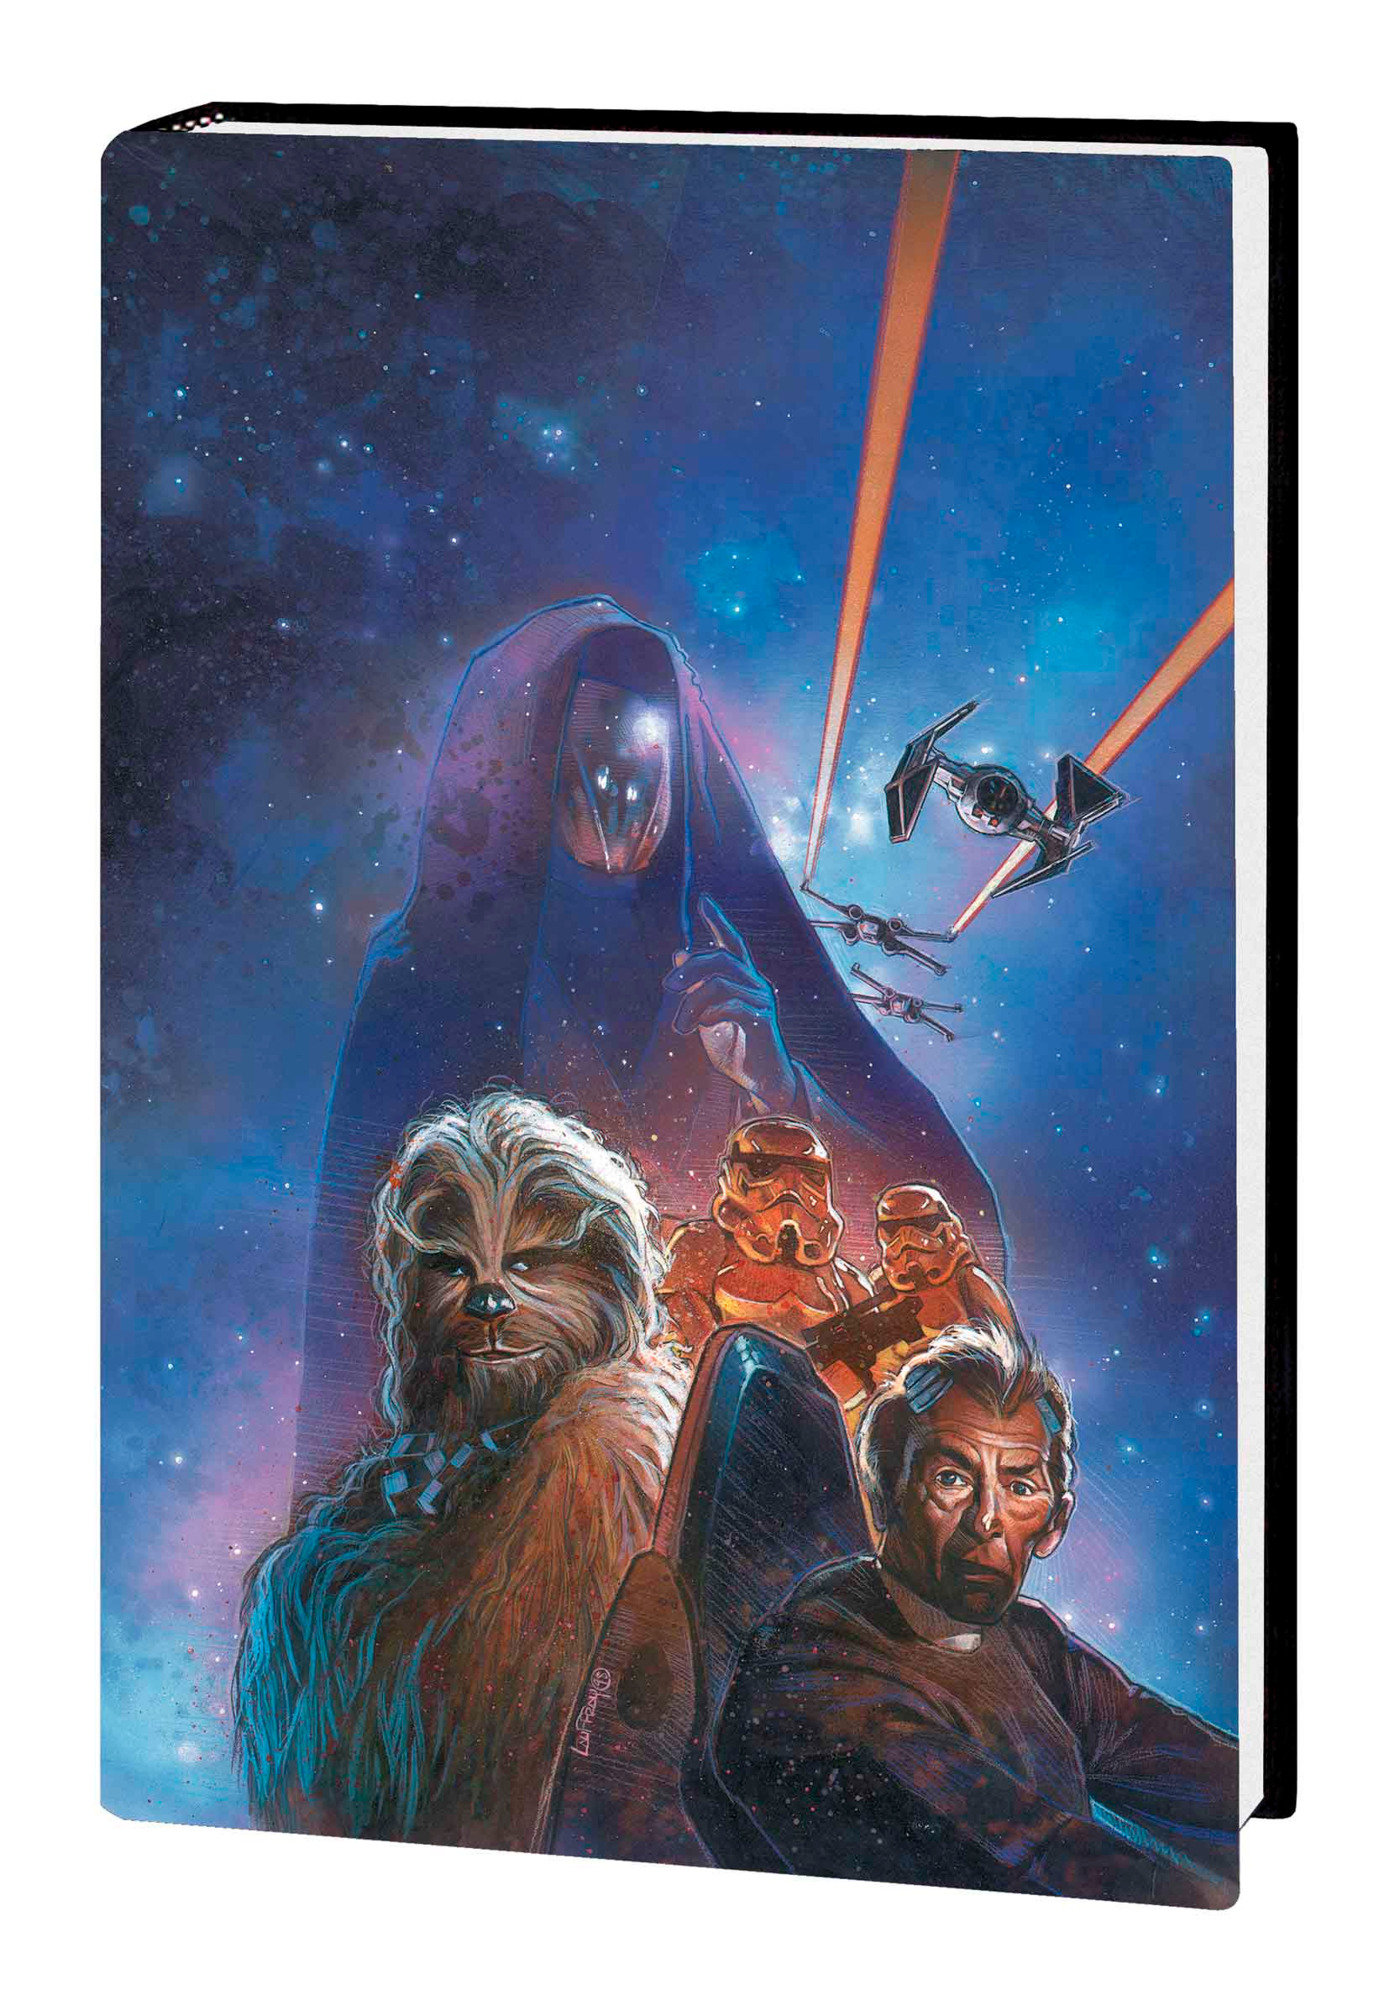 Star Wars Legends New Republic Omnibus Hardcover Volume 1 Lauffray Cover